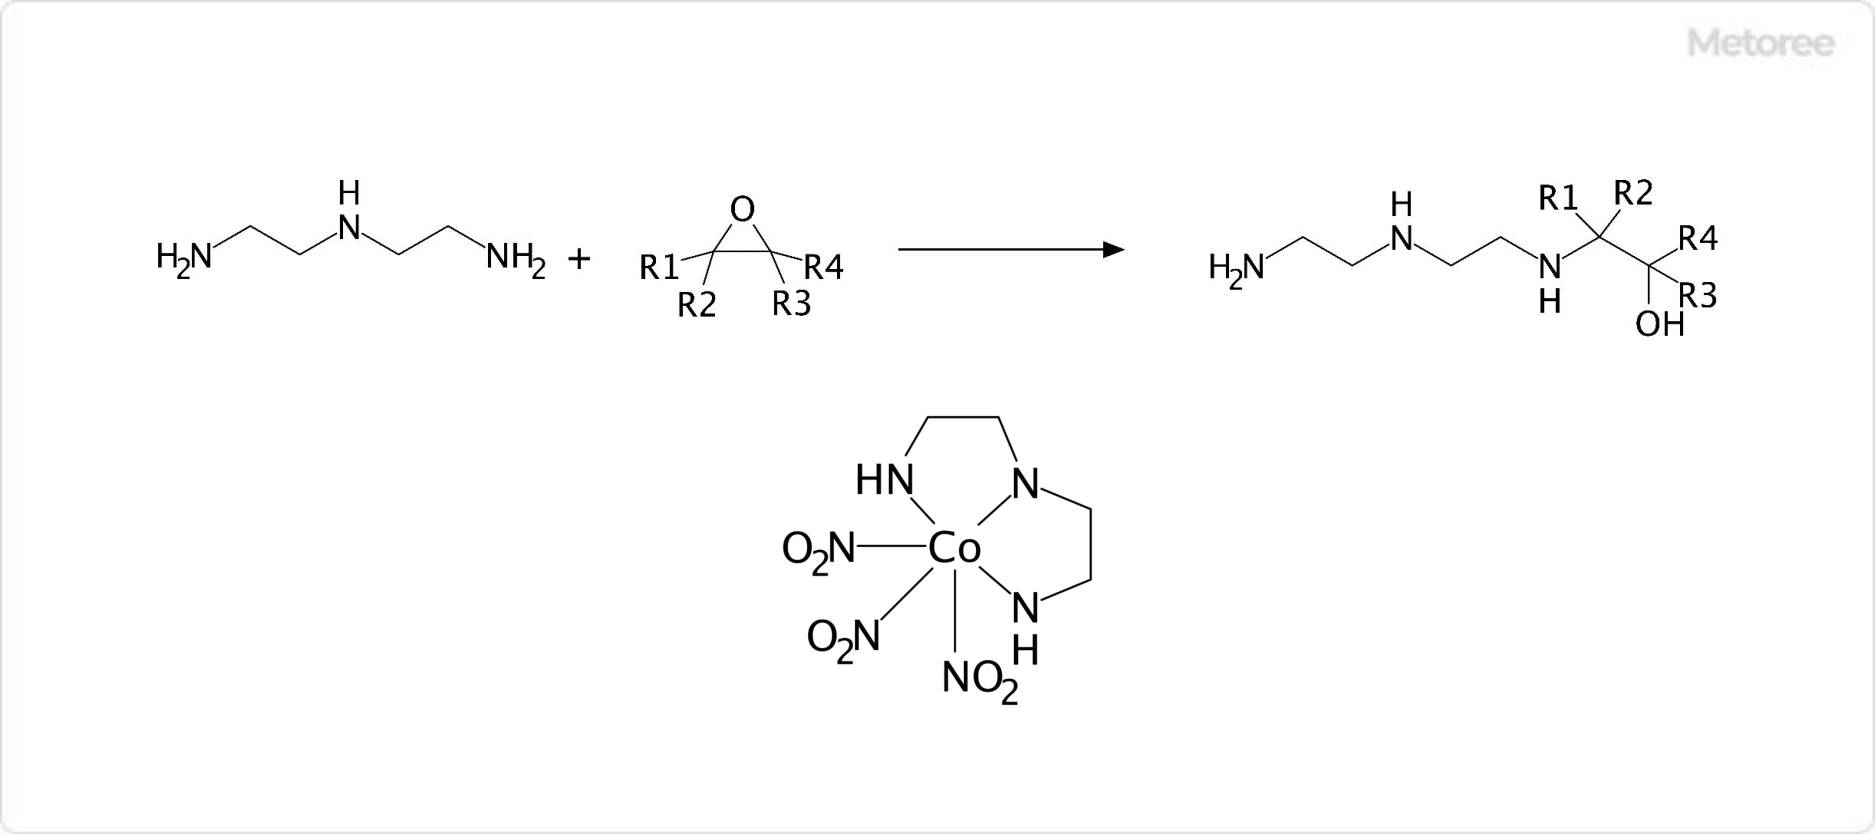 Reaction of Diethylenetriamine with Epoxide Groups